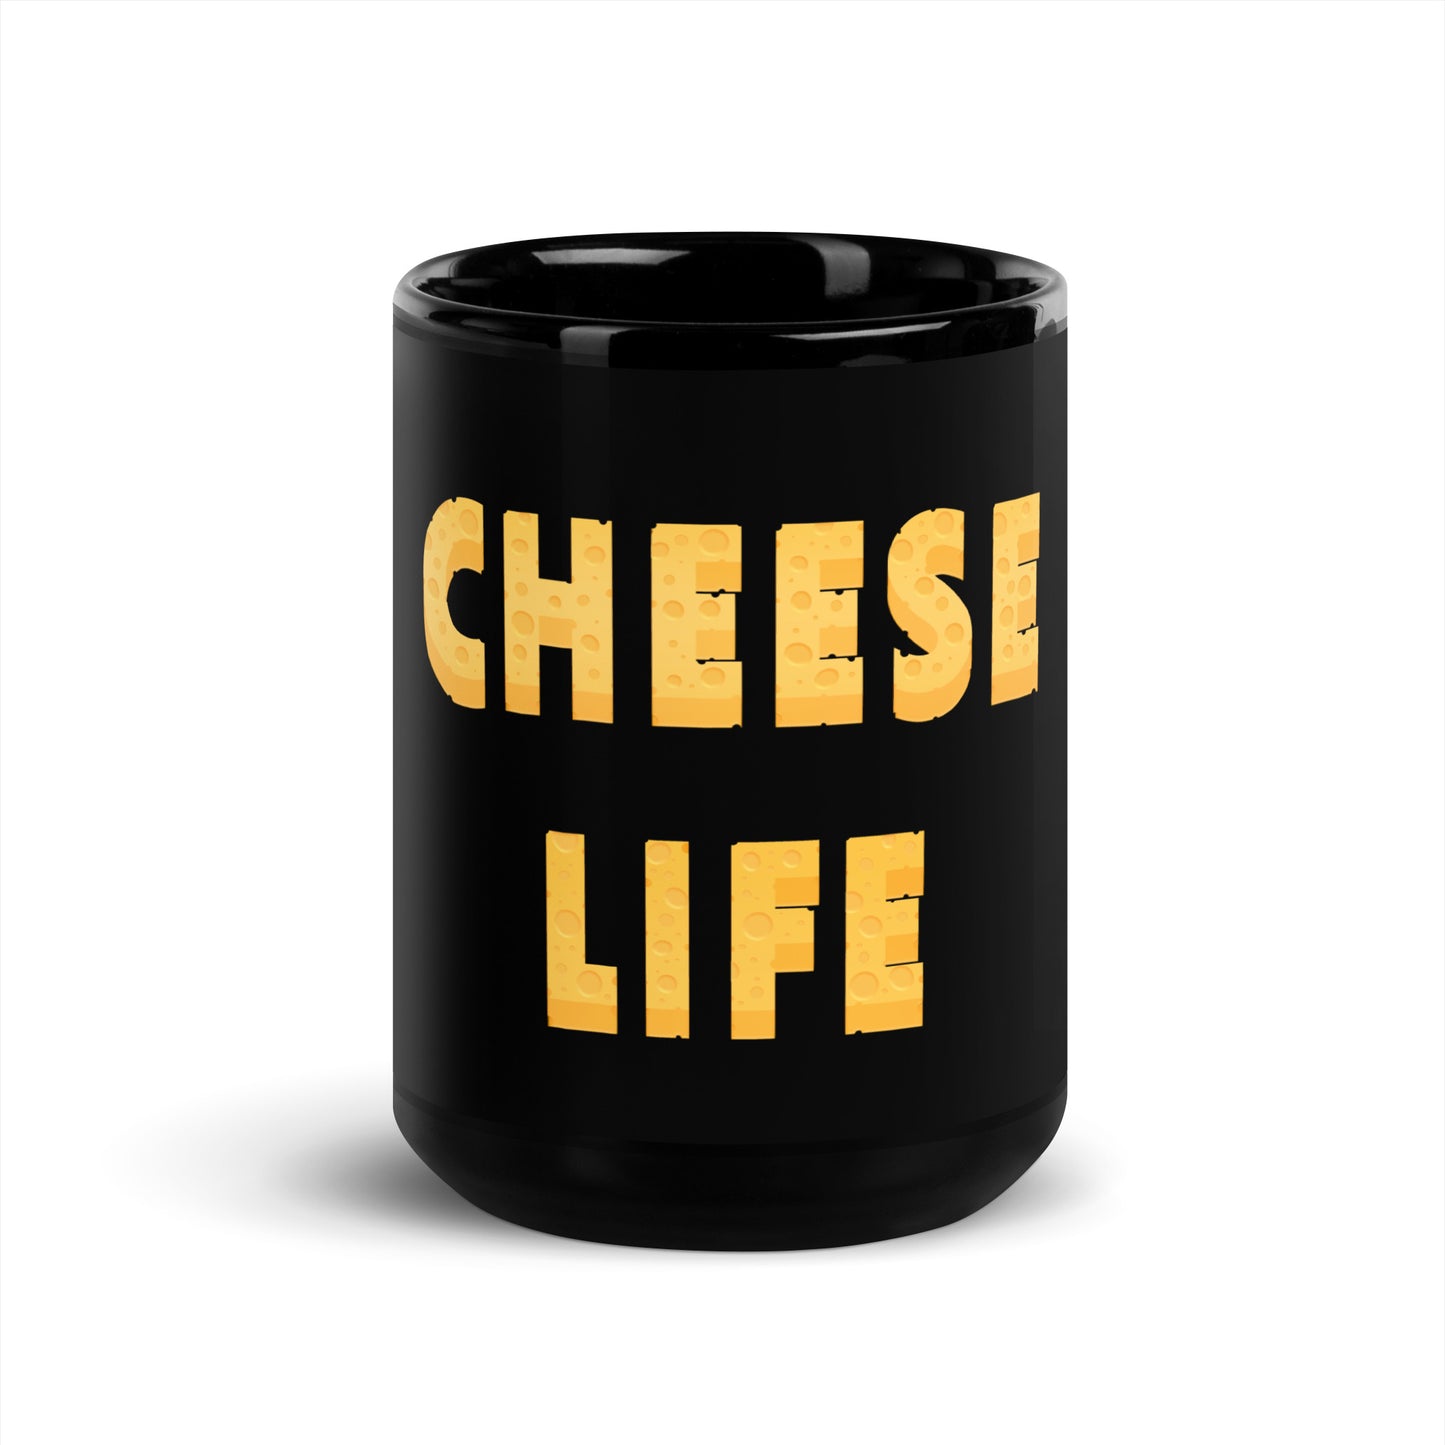 Cheese Life Classic Black Ceramic Mug